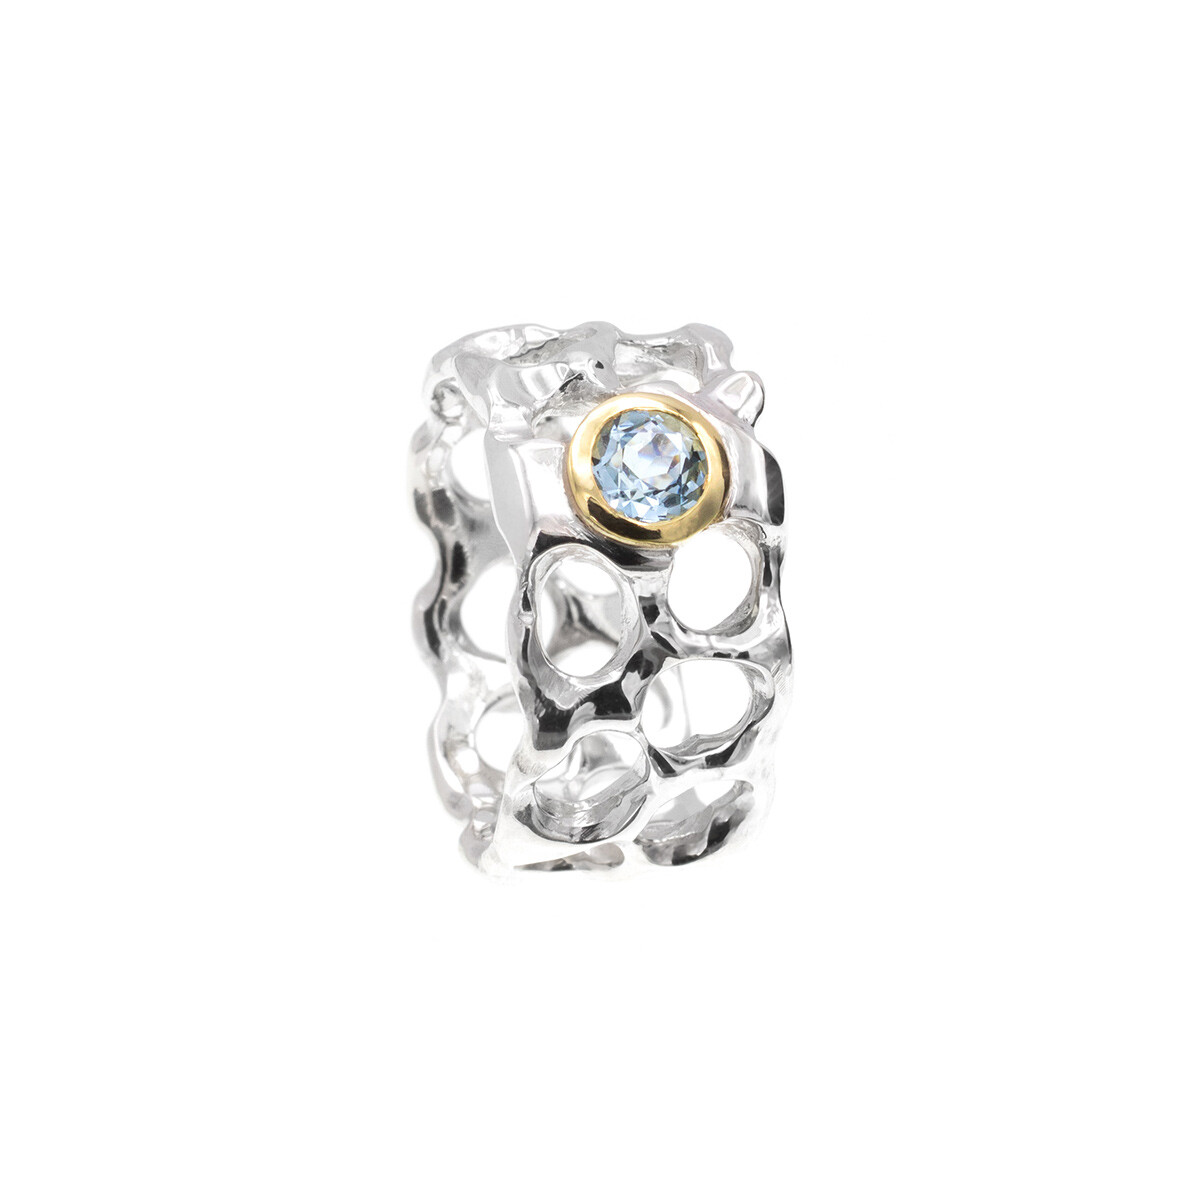 Aquamarin Ring Silber 925 / Gold 750